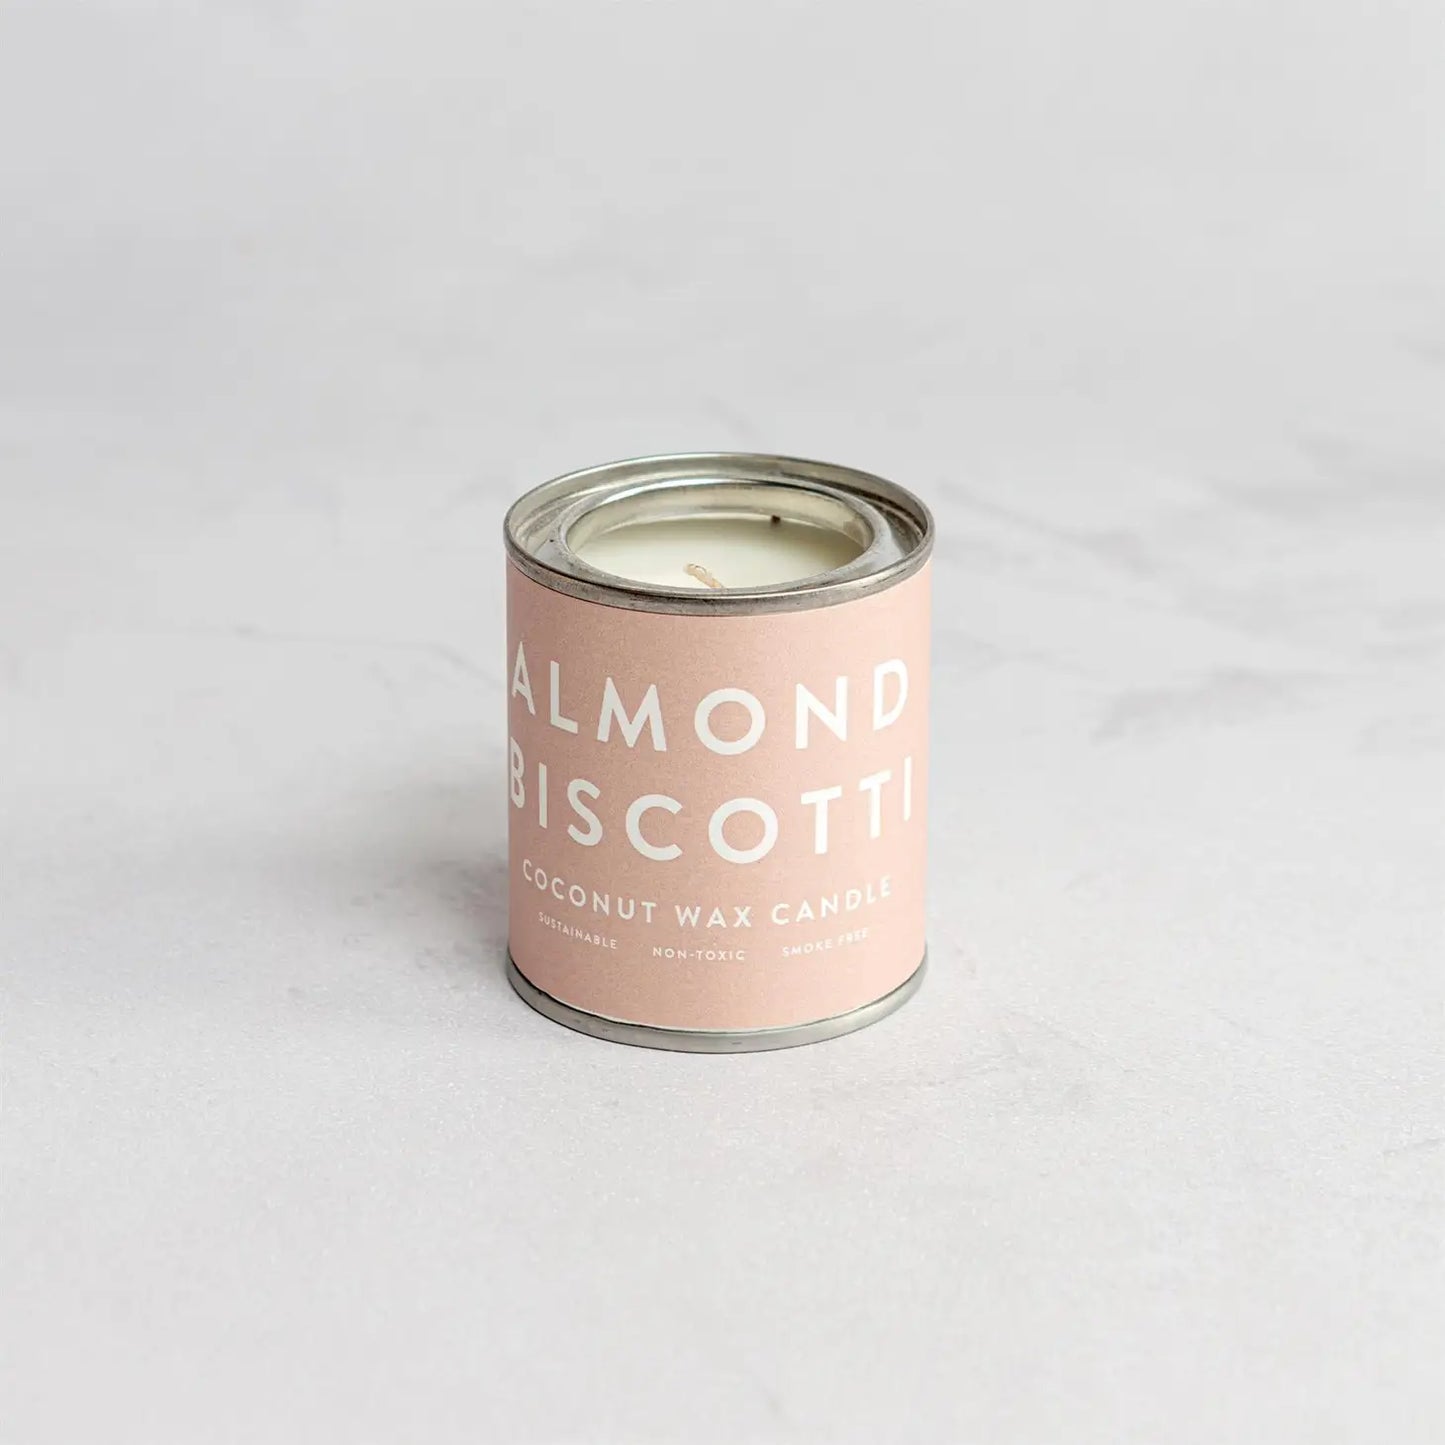 Almond Biscotti Mini Conscious Candle